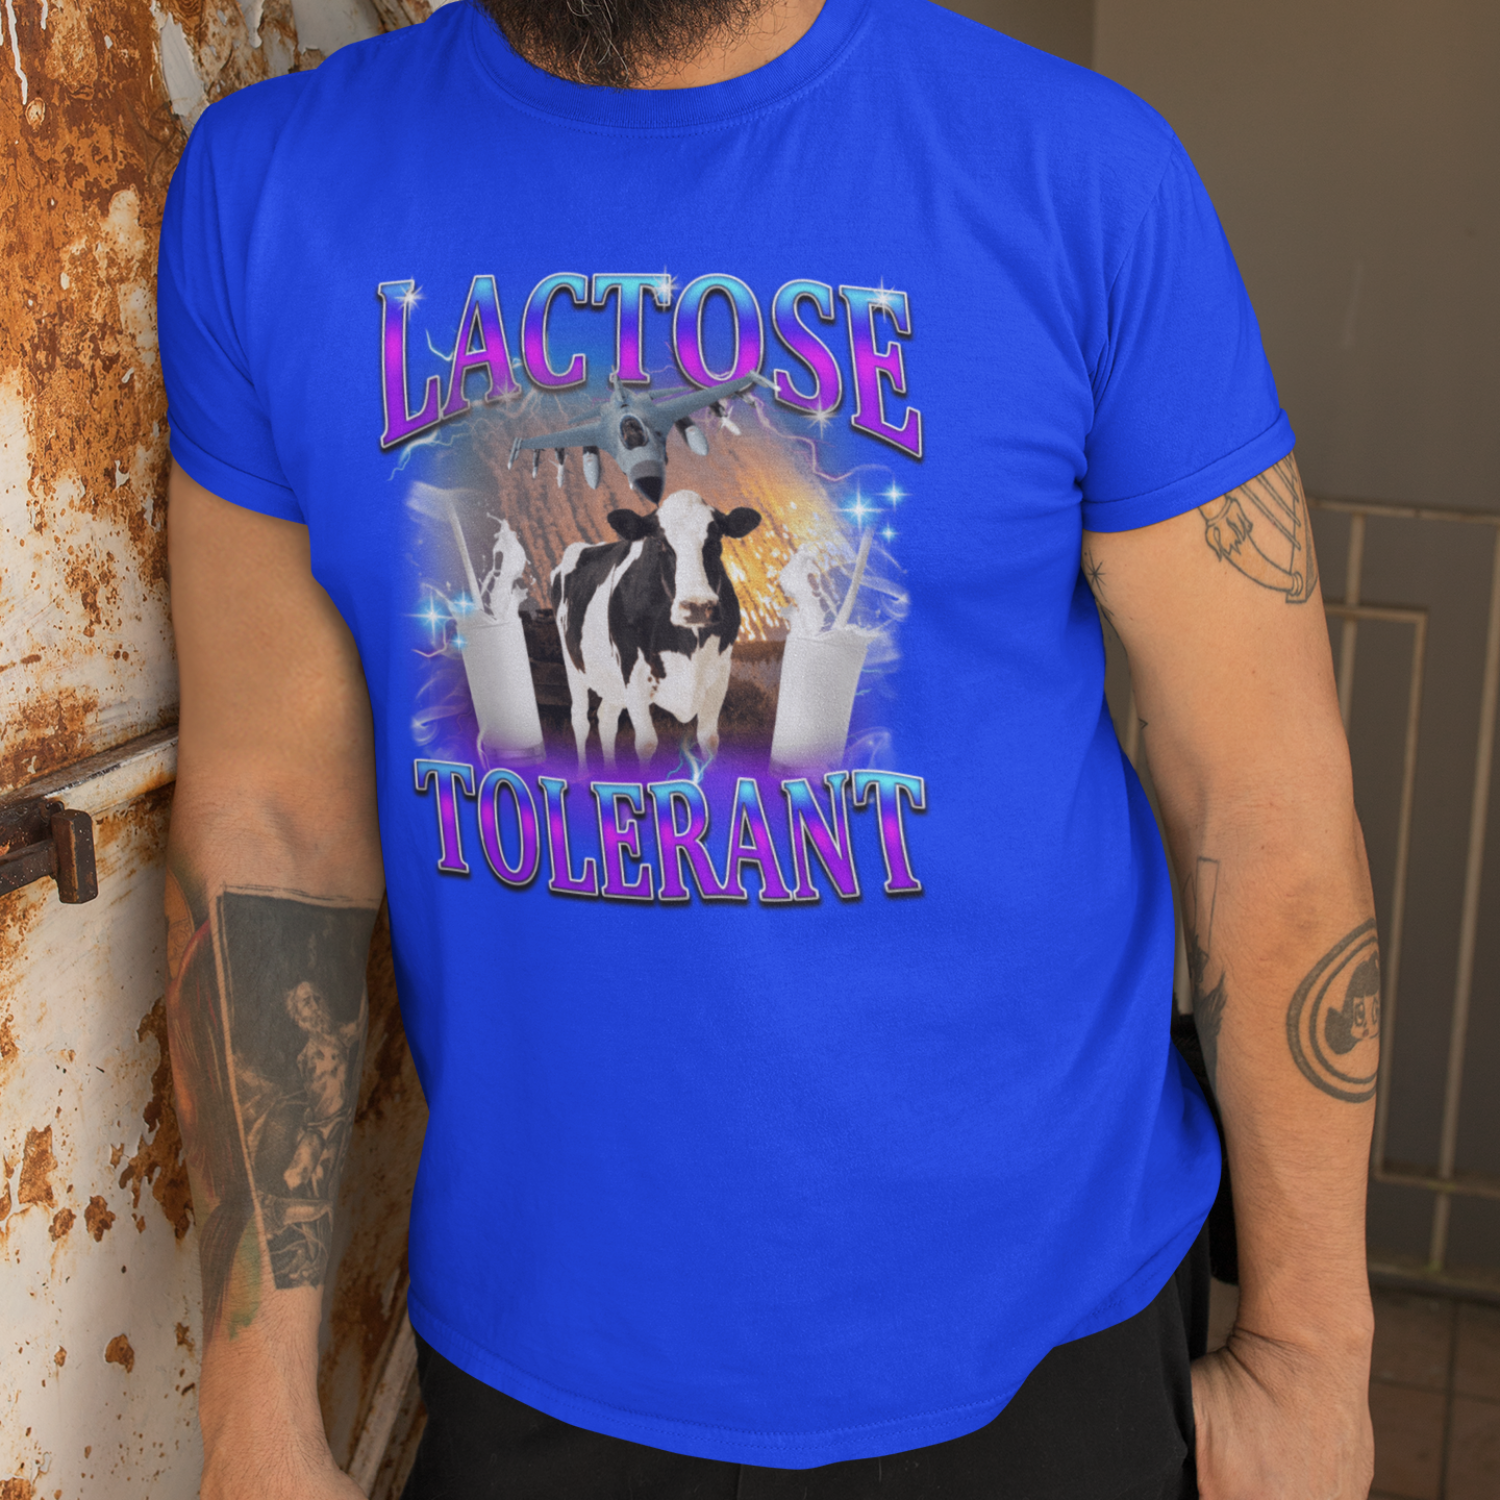 Lactose Tolerant T Shirt